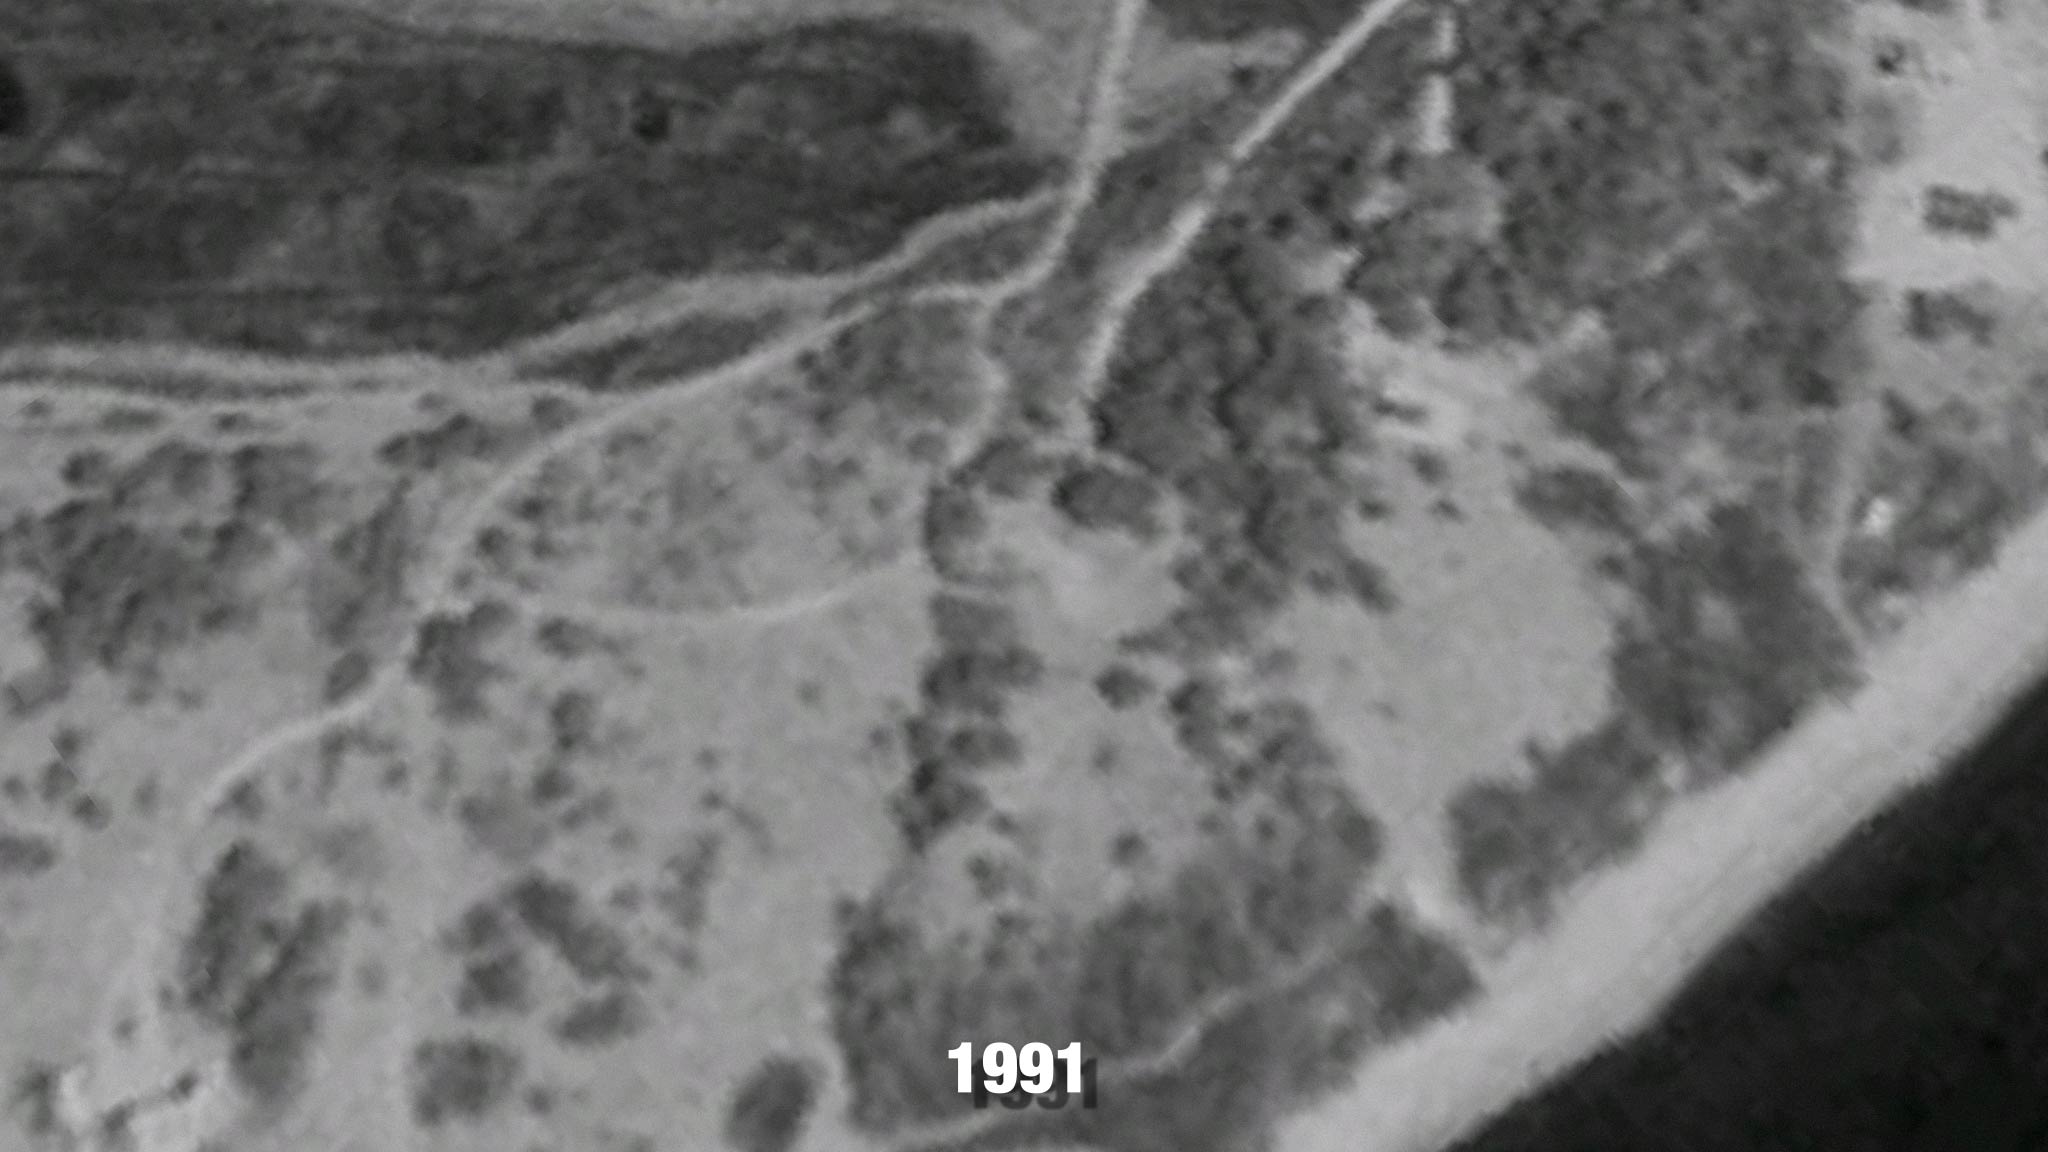 Martha's Vineyard satellite image from 1991 before mega-mansions